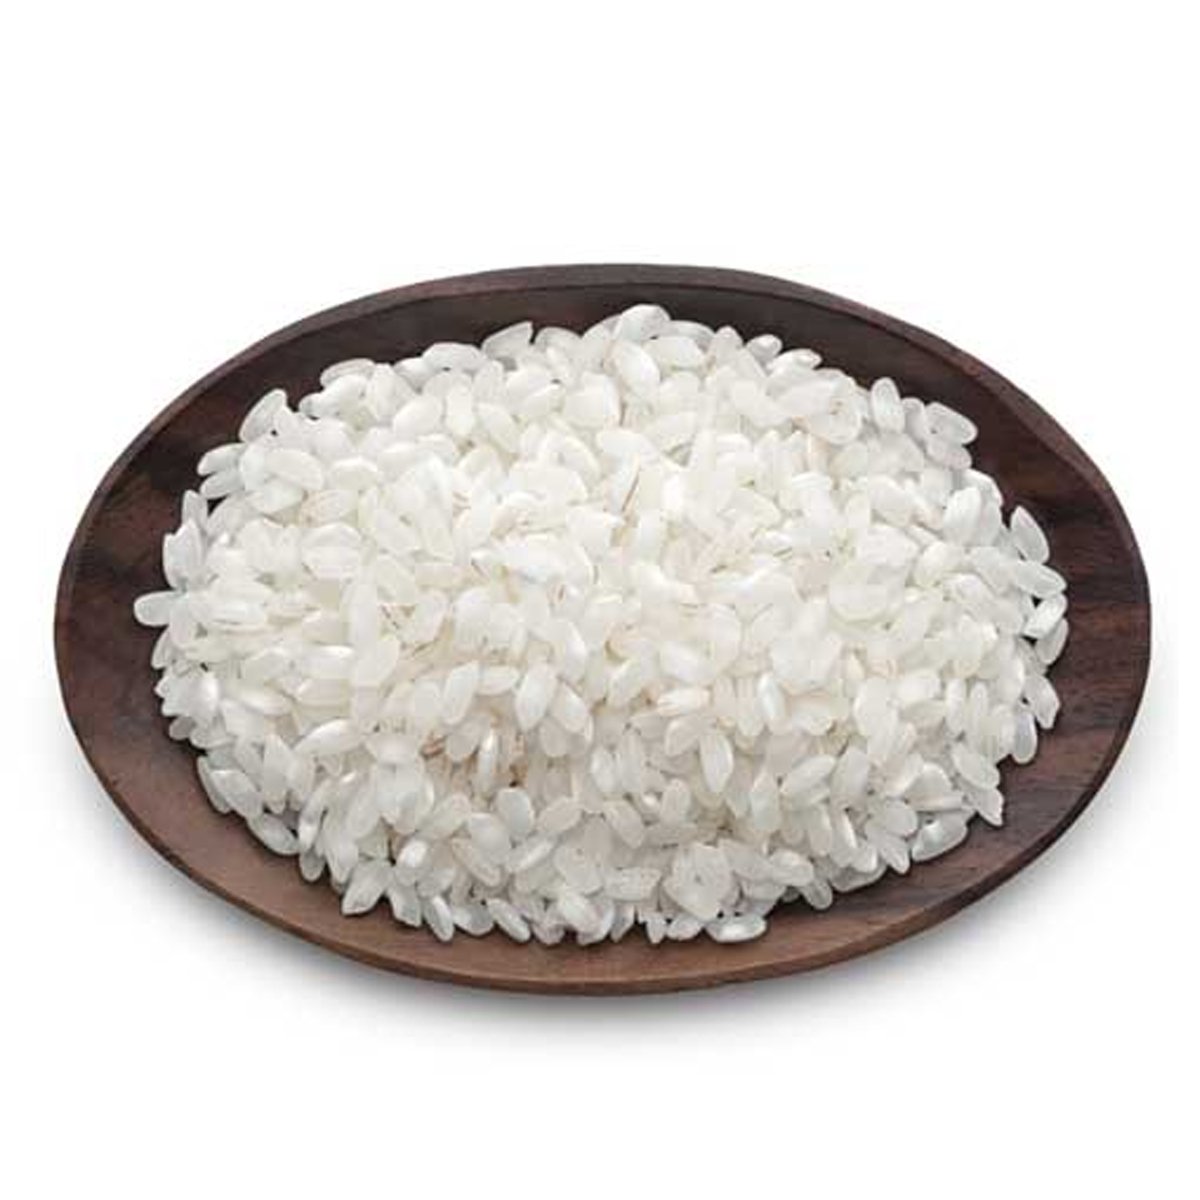 Idli Rice 500g Approx Weight